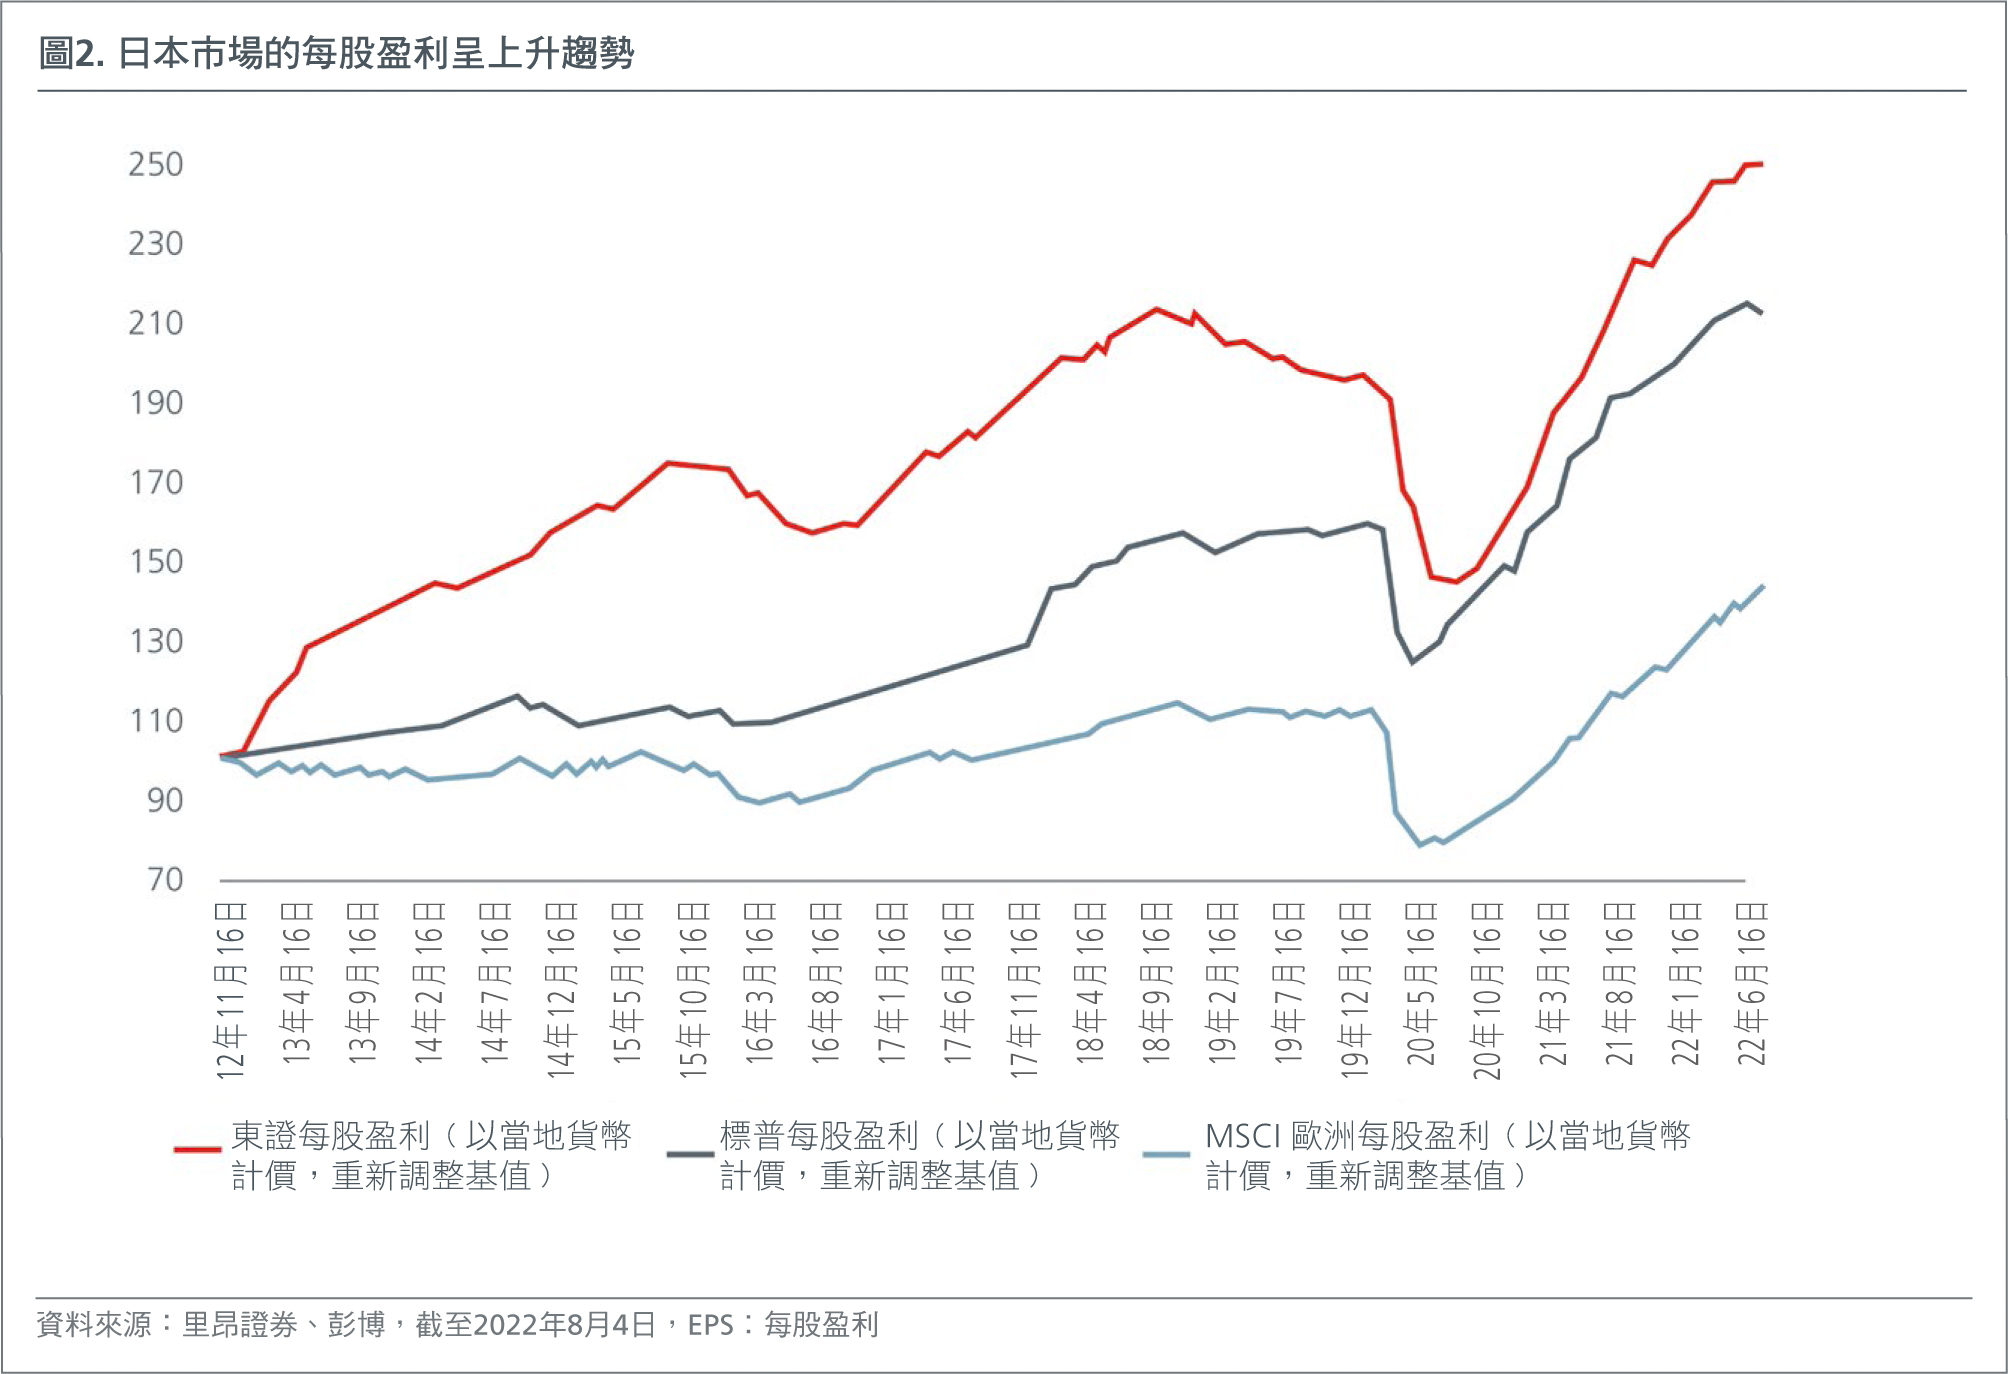 HK-CN-japans-good-value-creates-alpha-opportunities-Fig2